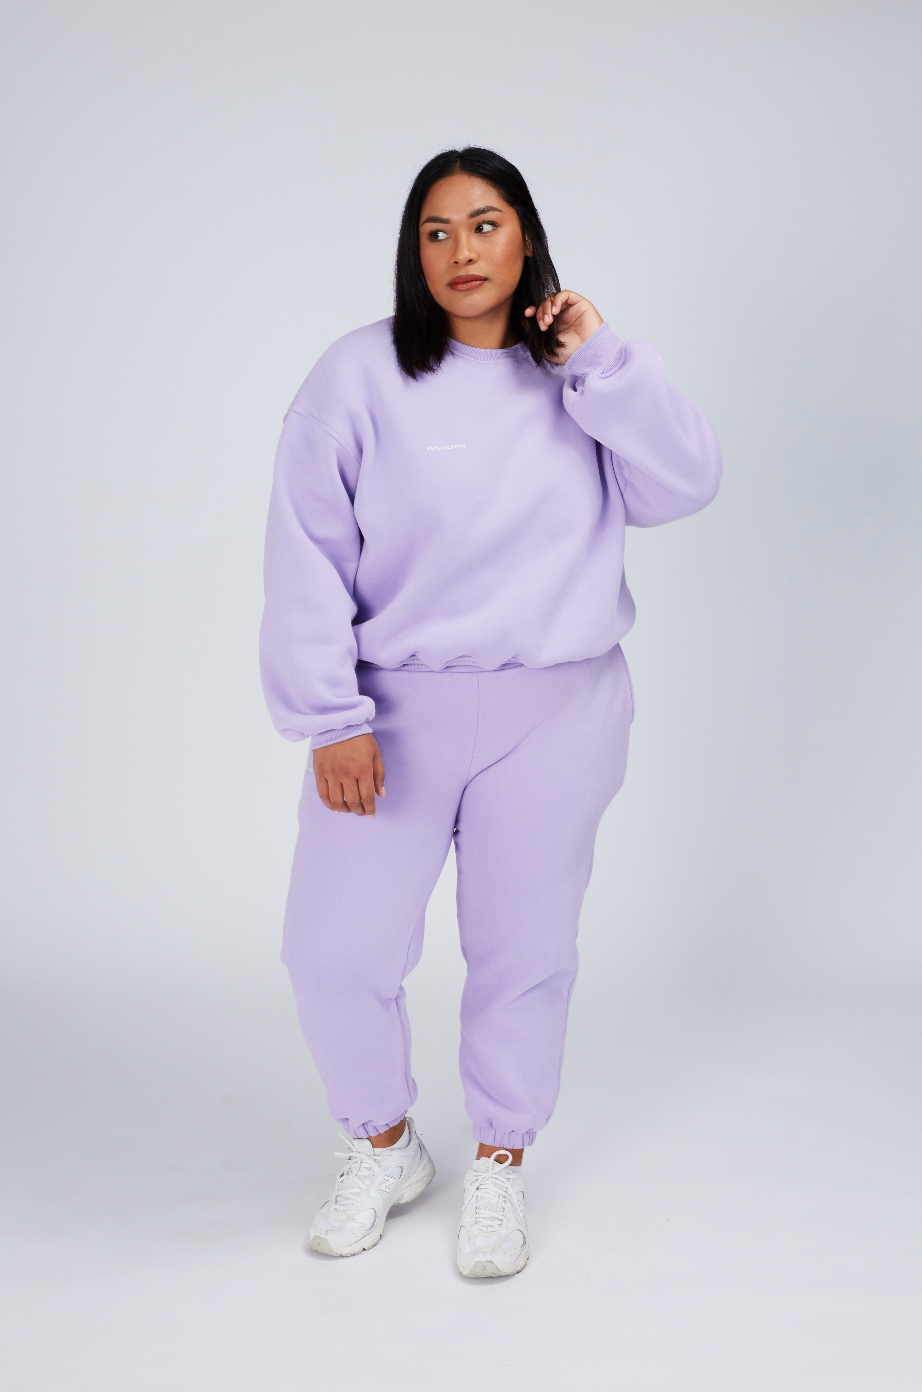 Lilac Jumper For Women - Luxe 23 by Kate Galliano Activewear - purple jumper - women's jumper australia